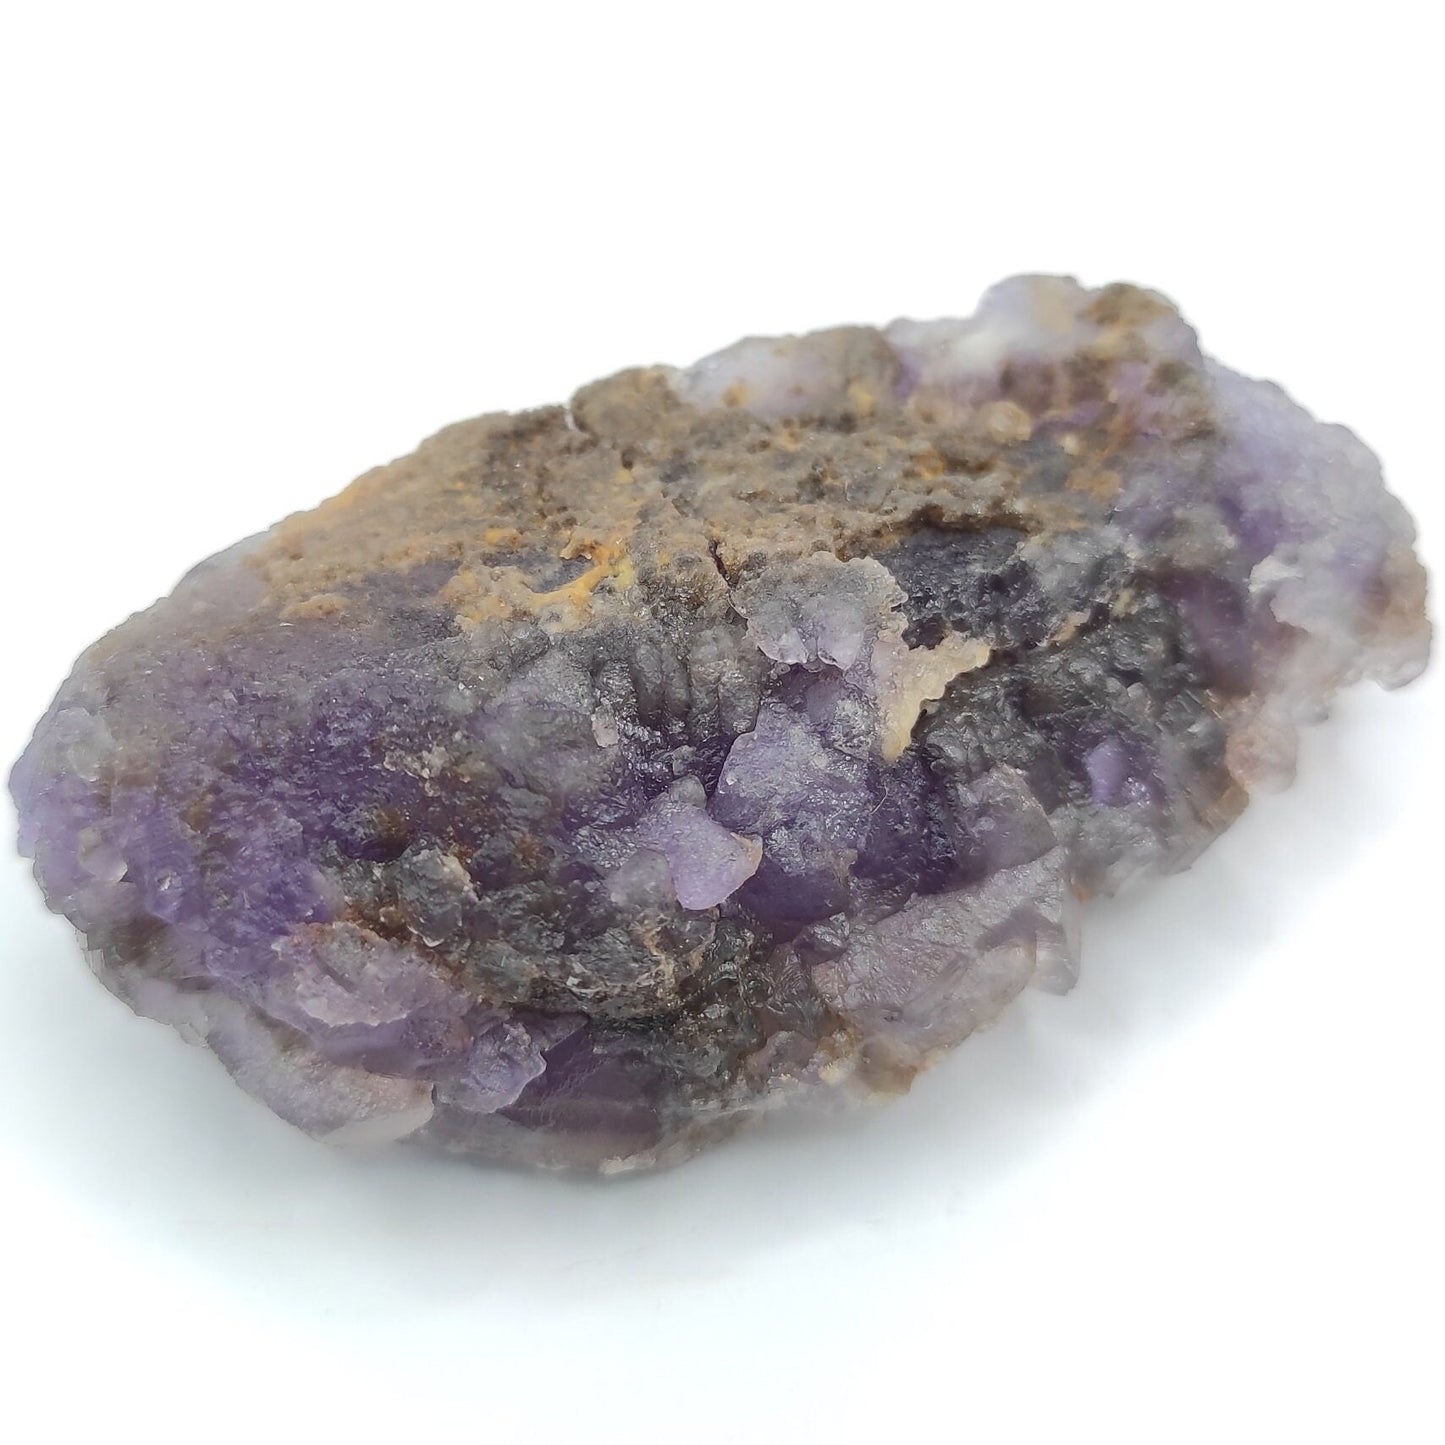 73g Purple Cubic Fluorite - Balochistan, Pakistan - Raw Fluorite Mineral Specimen - Rough Fluorite Pieces - Fluorite Crystals